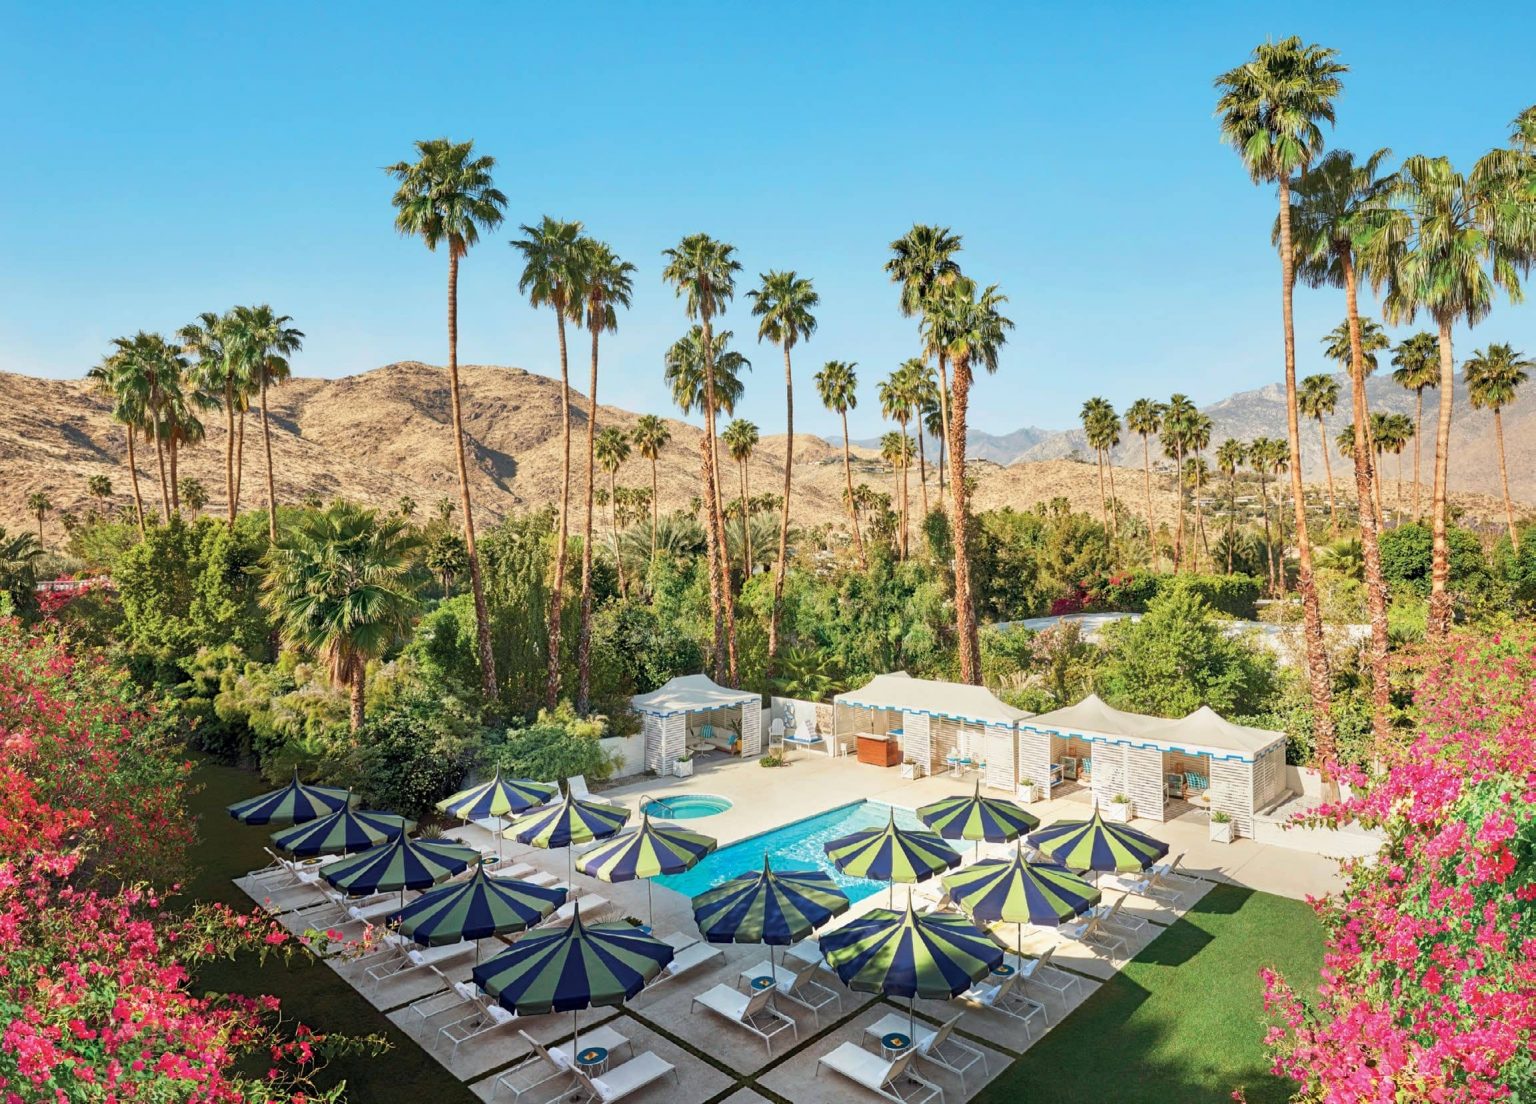 Parker Hotel - Palm Springs, California – CELLOPHANELAND*